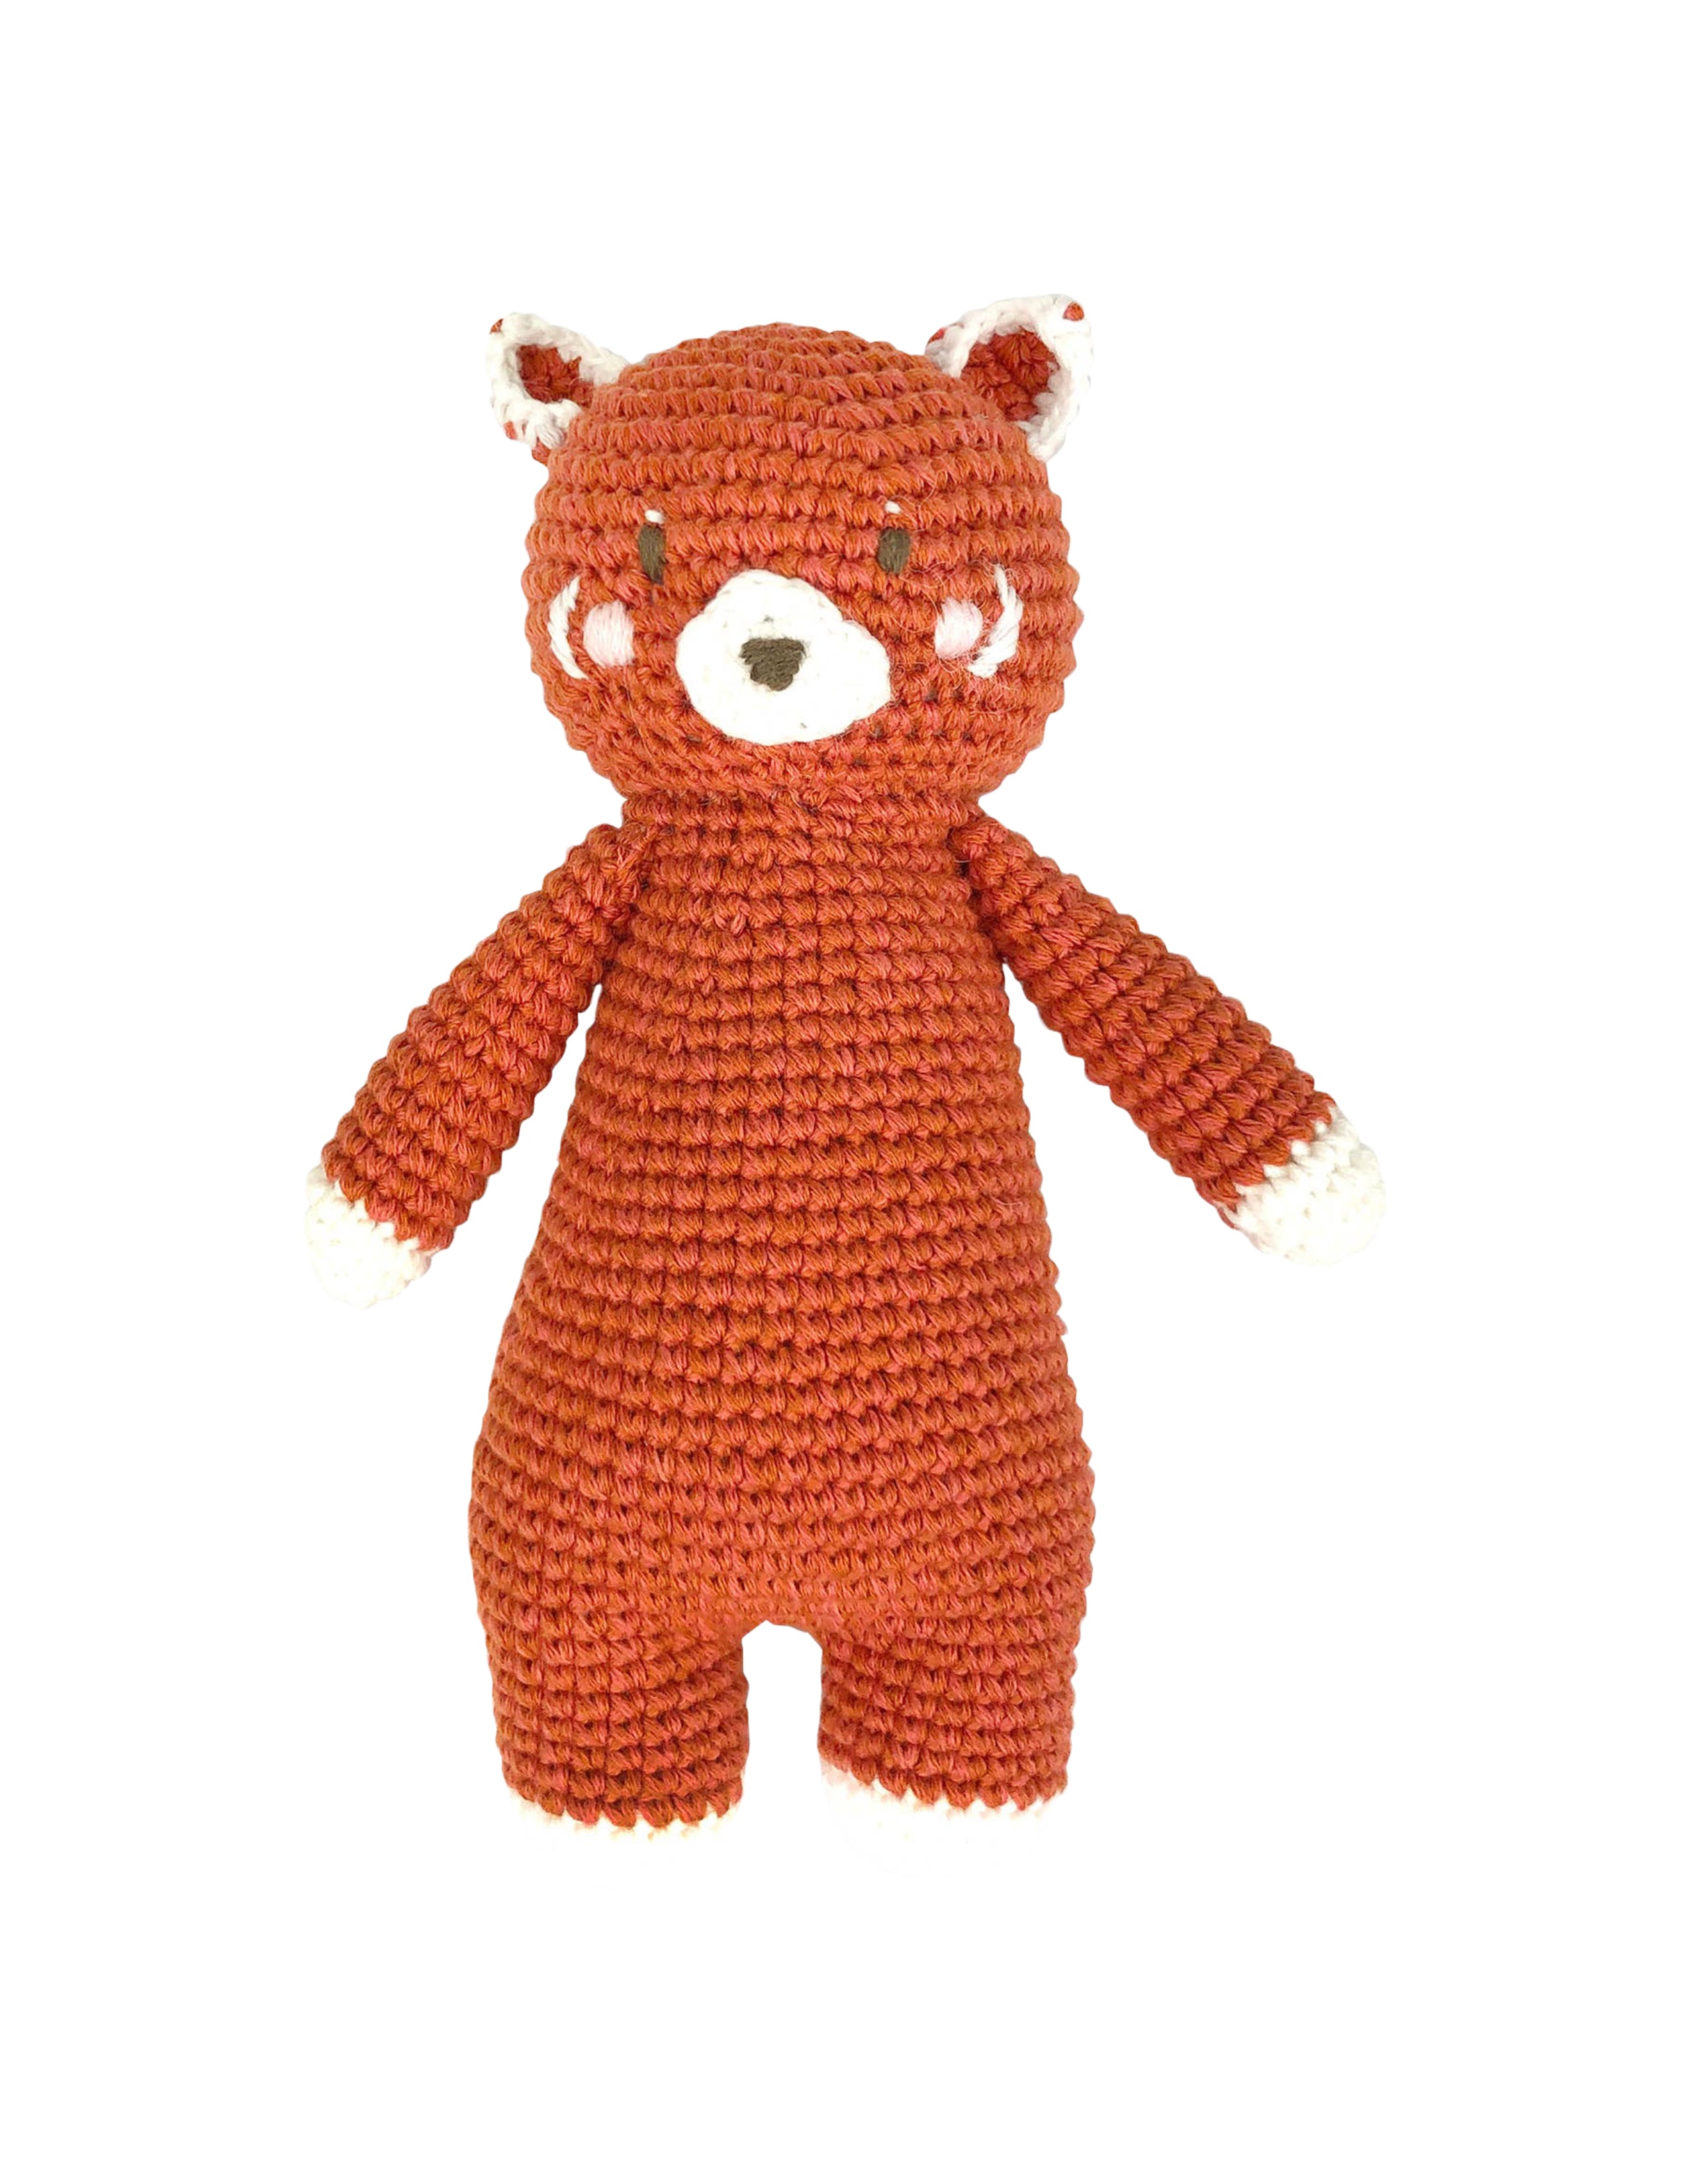 Crochet Red Panda Rattle Toy